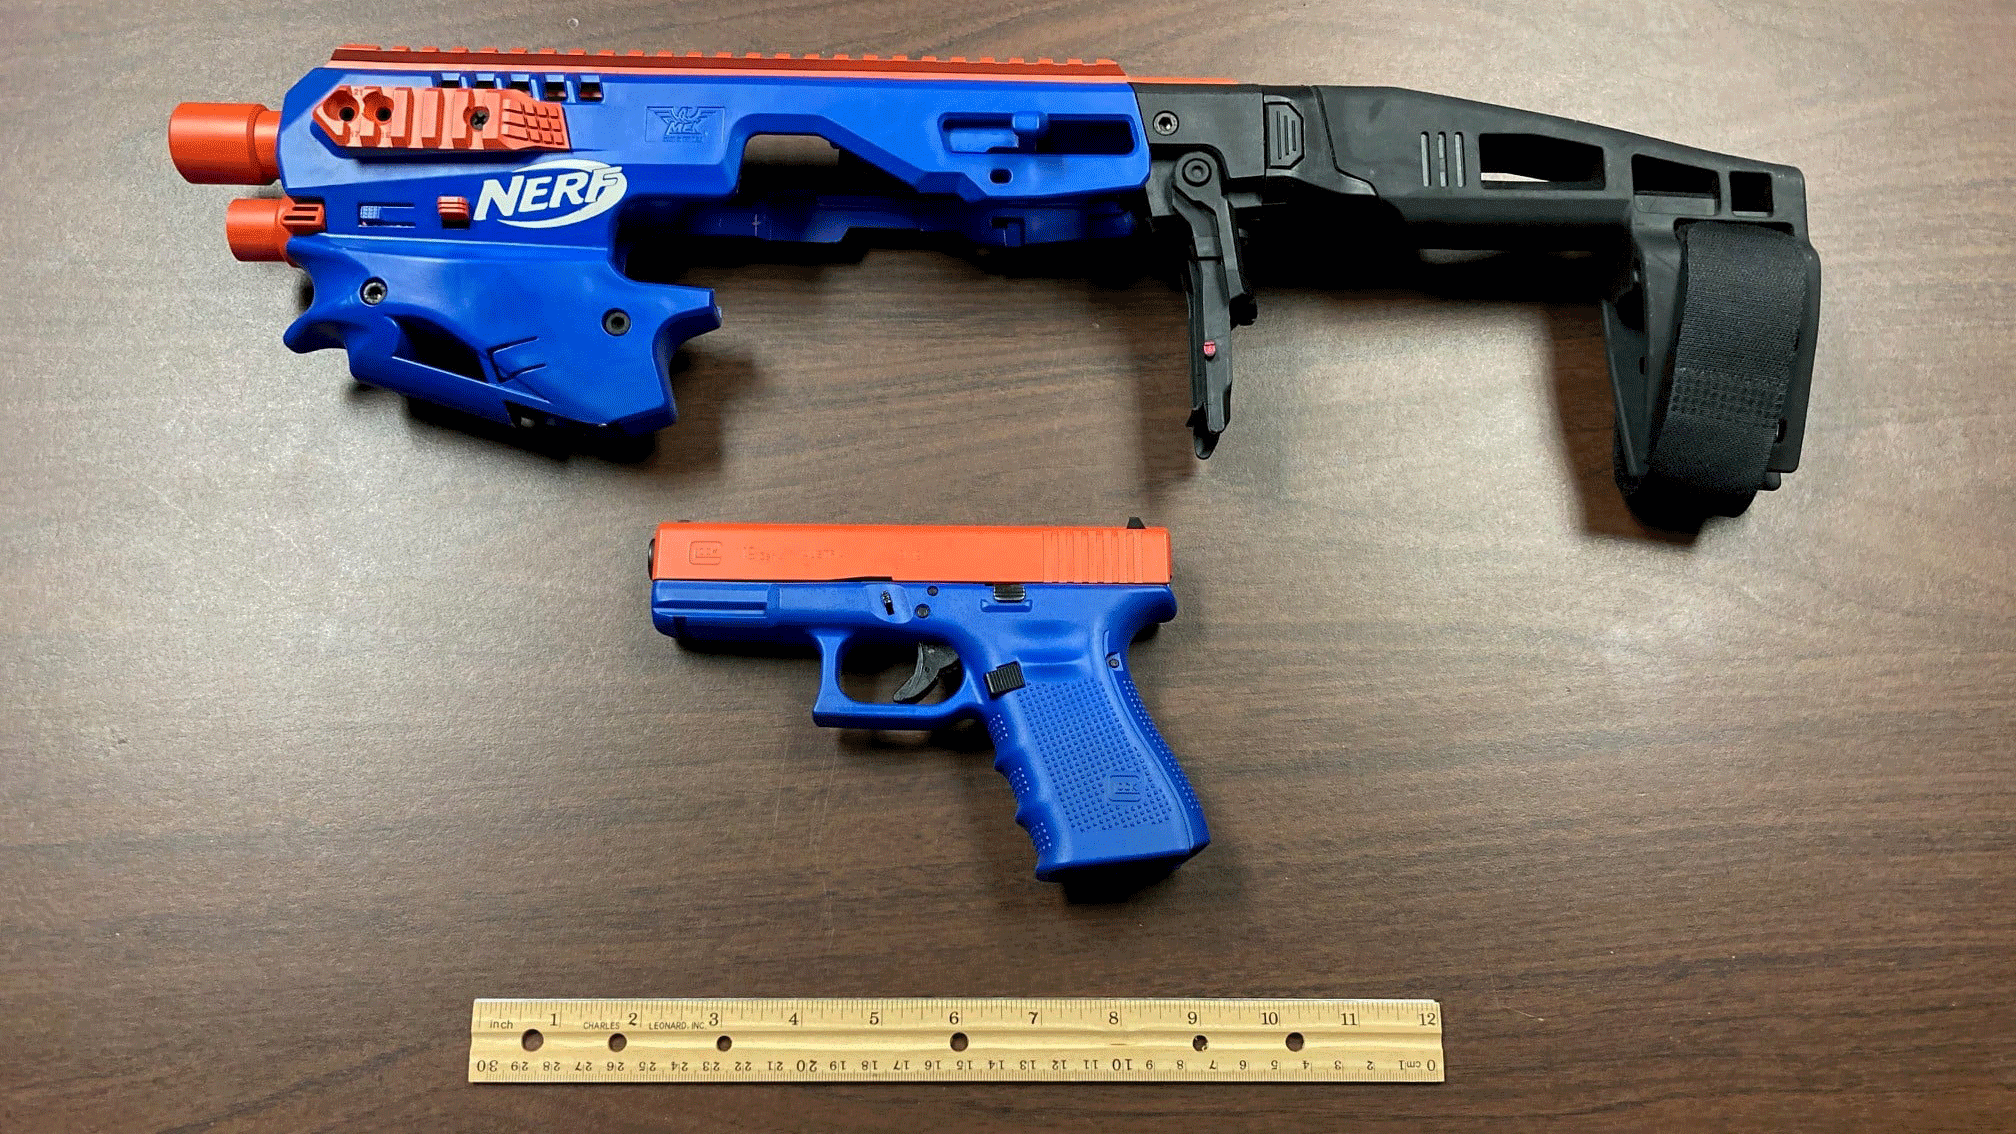 gun disguised as Nerf toy seized in drug raid